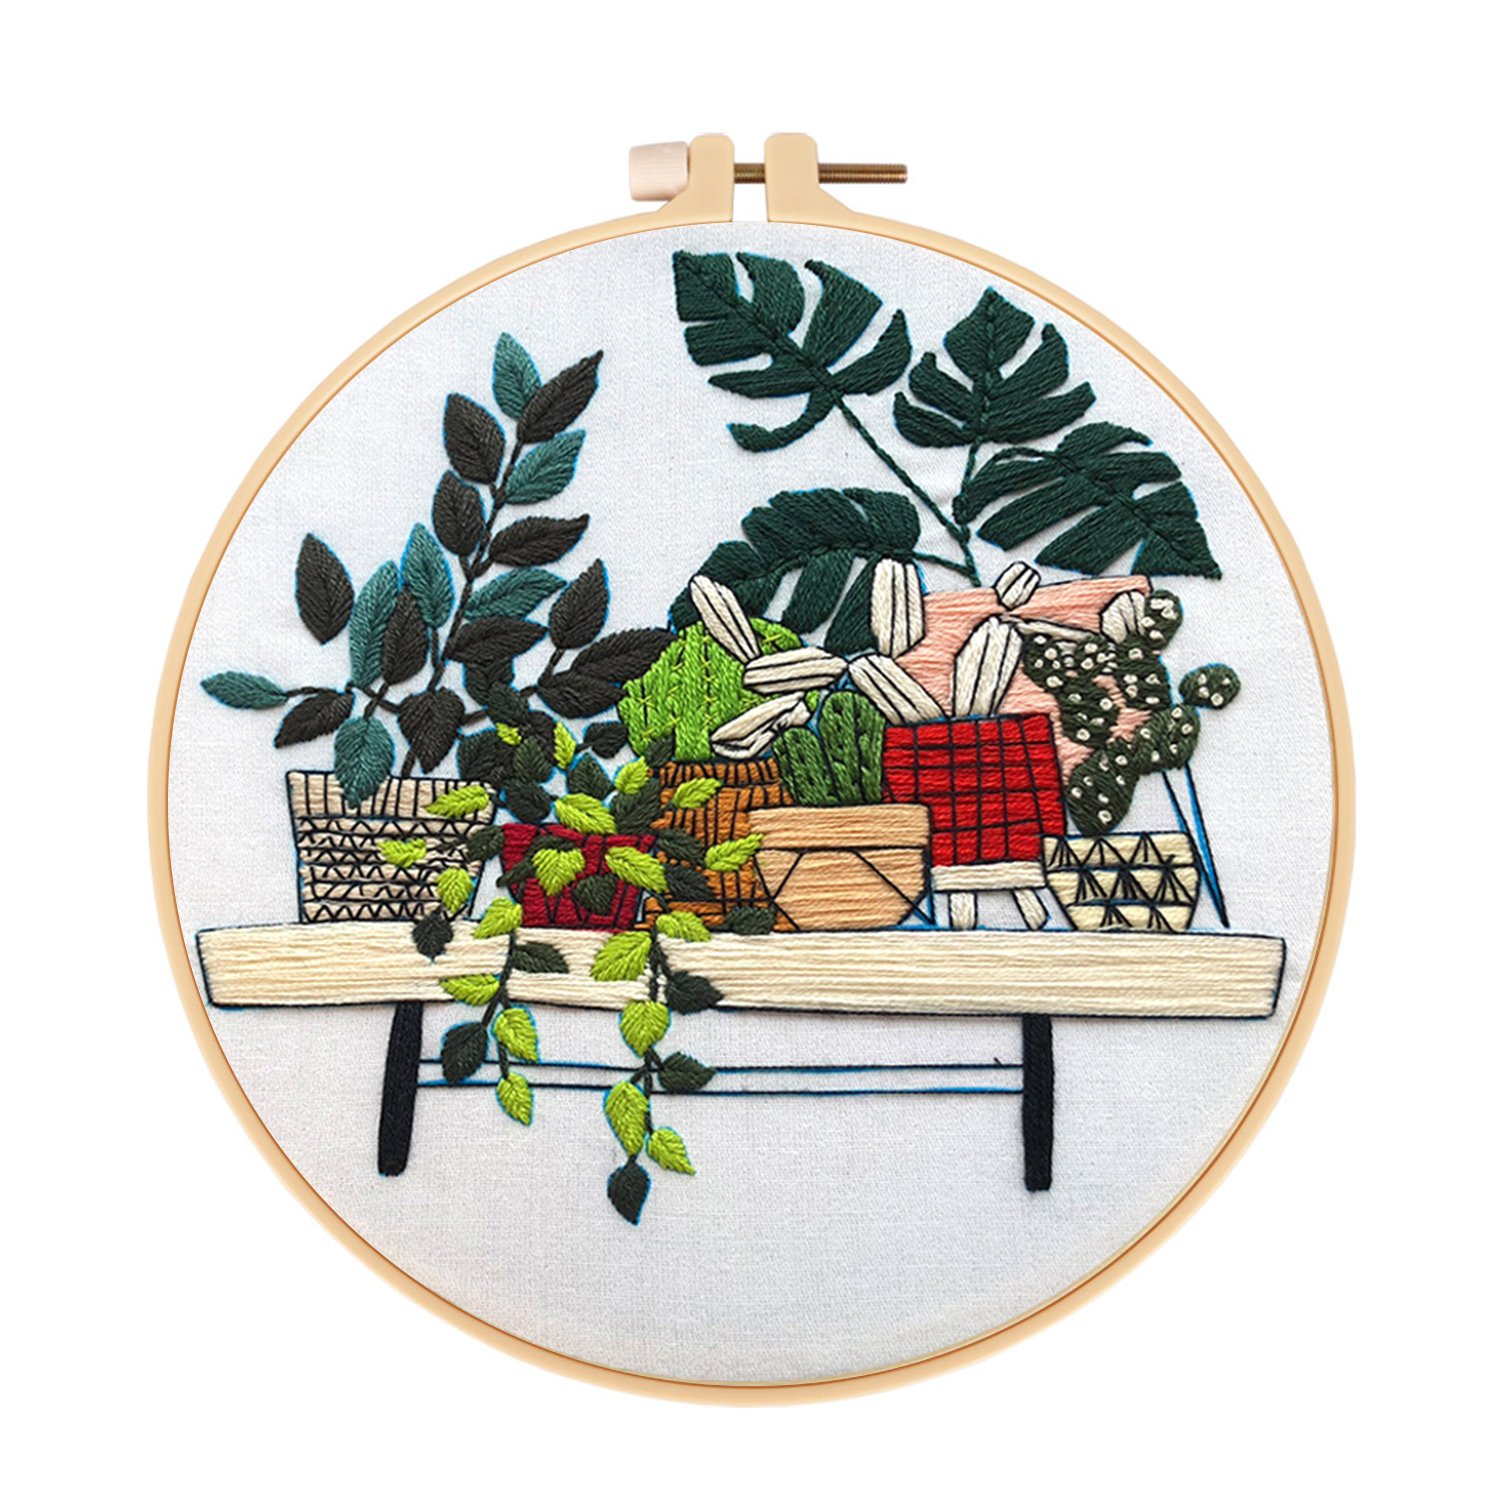 DIY Handmade Embroidery Cross stitch kit - Green Potted Plants Pattern